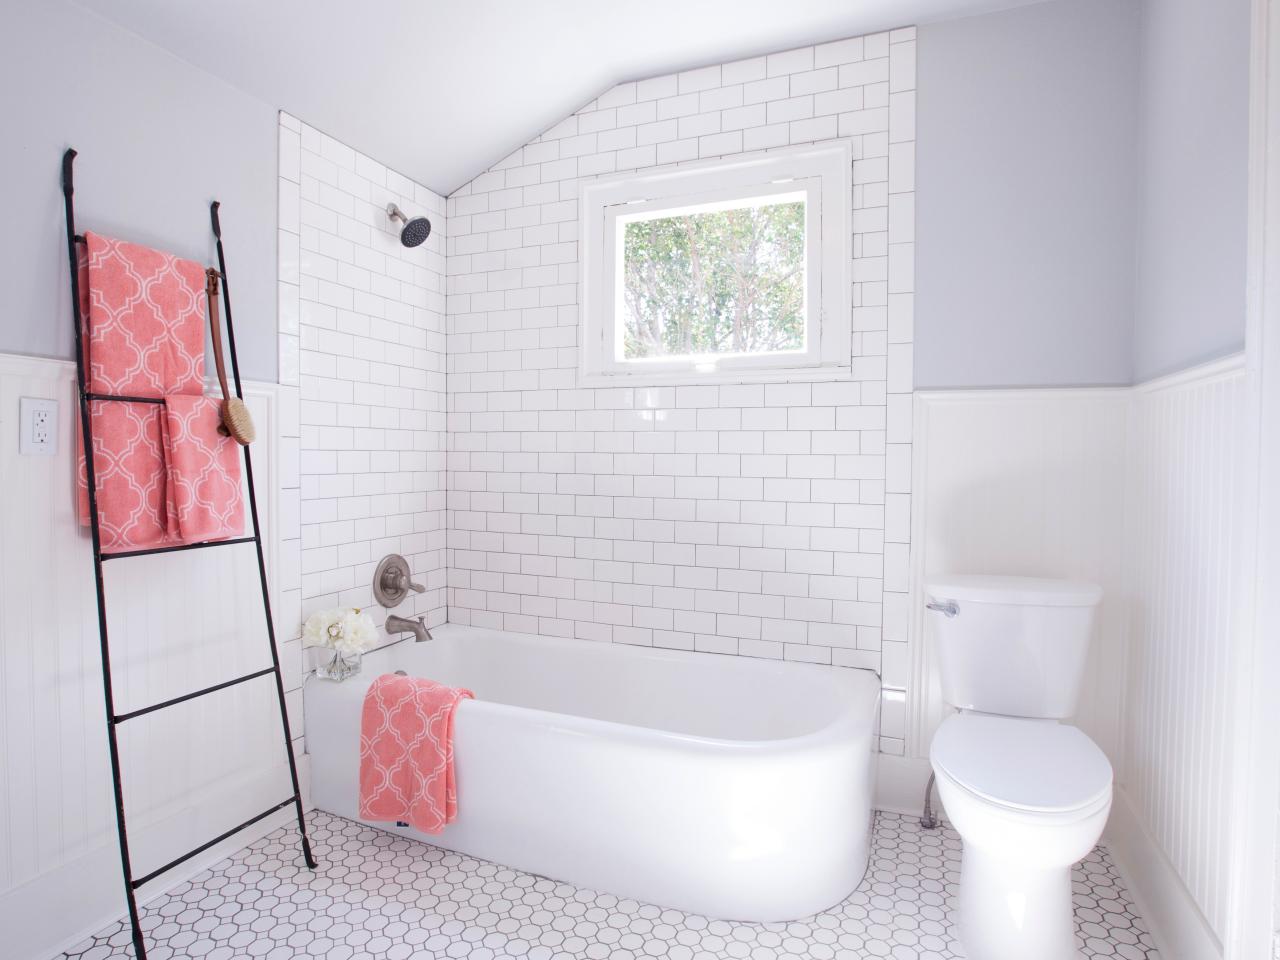 Ceramic Tile Flooring Tips Diy, Cost To Tile Bathroom Floor And Walls